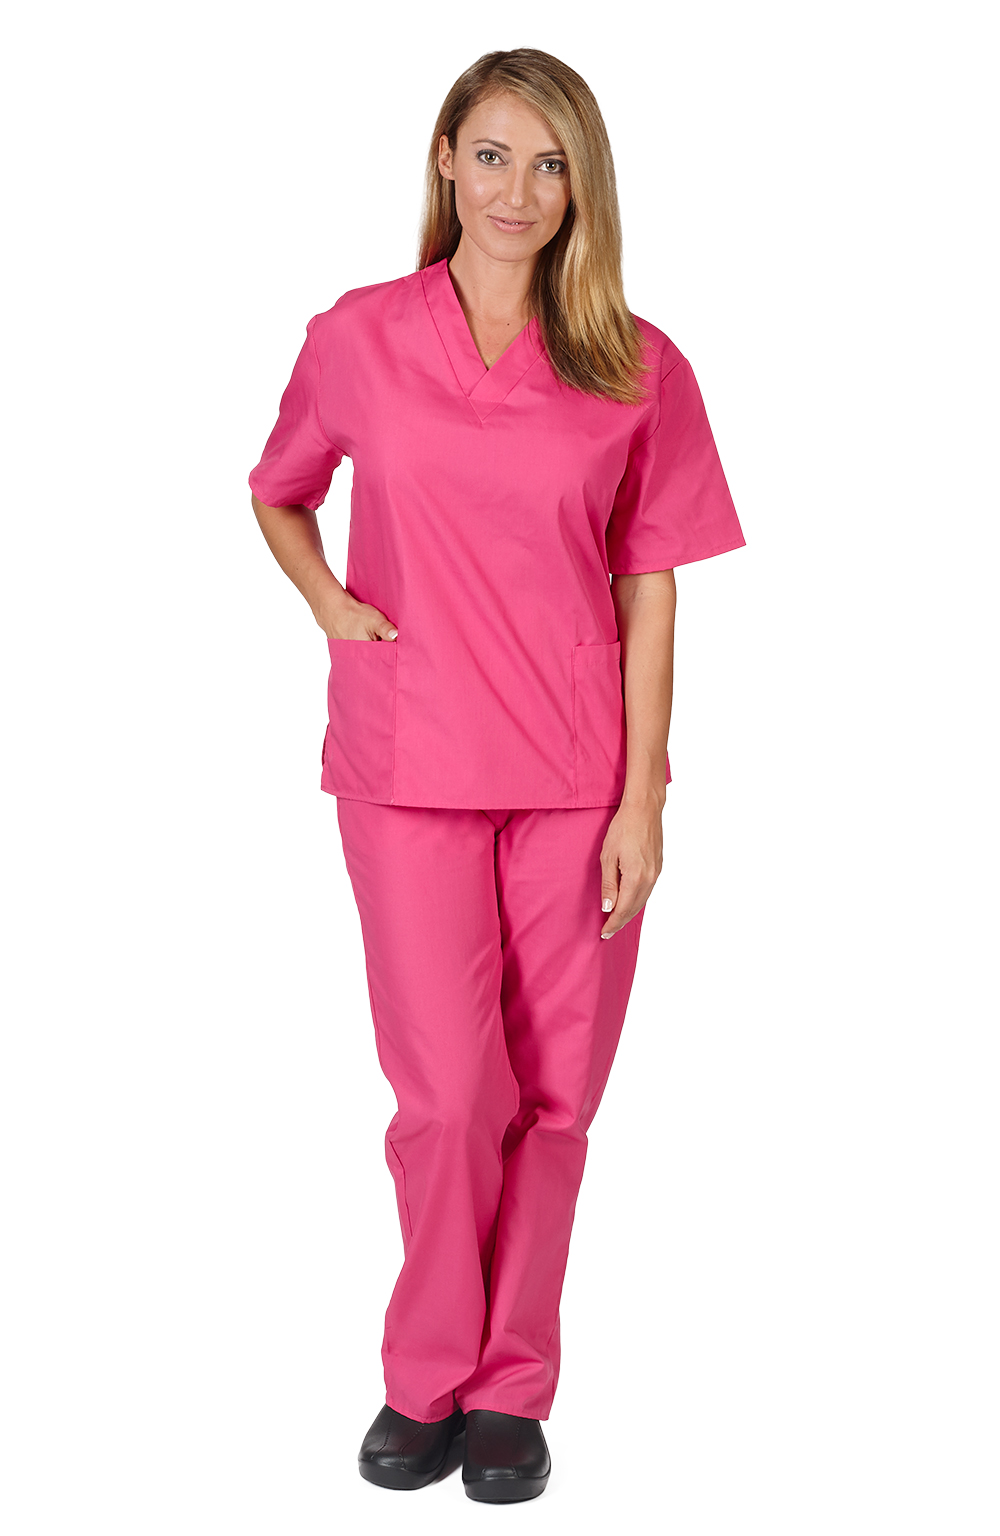 Unisex Men/Women Natural Uniforms Medical Hospital Nursing Scrub Set Top & Pants 